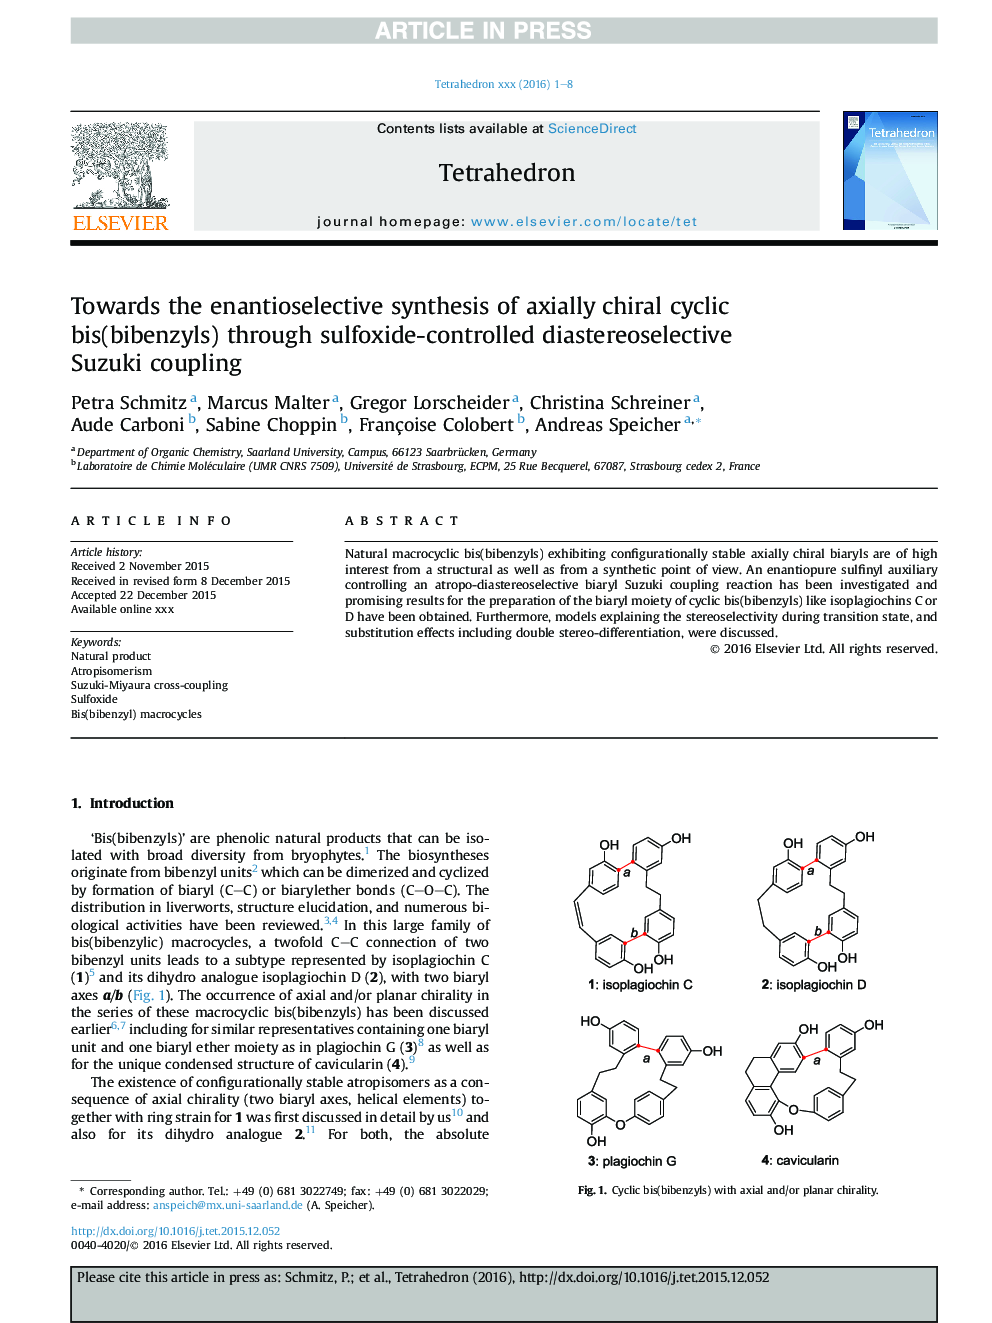 Towards the enantioselective synthesis of axially chiral cyclic bis(bibenzyls) through sulfoxide-controlled diastereoselective Suzuki coupling